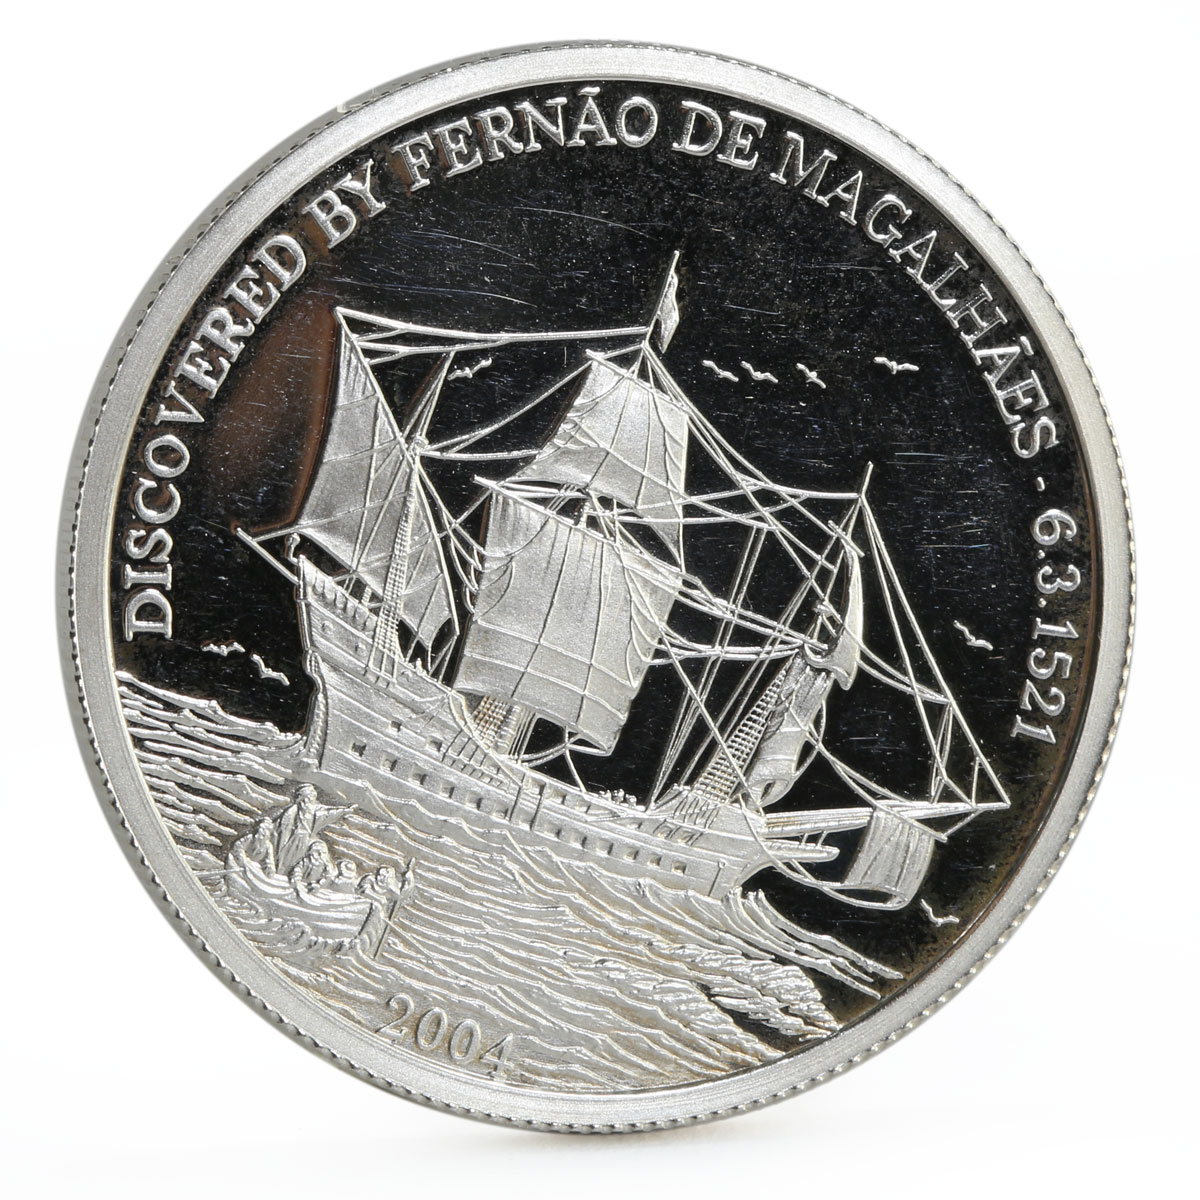 Northern Mariana Islands 5 dollars Fernando Magellan Ship proof silver coin 2004